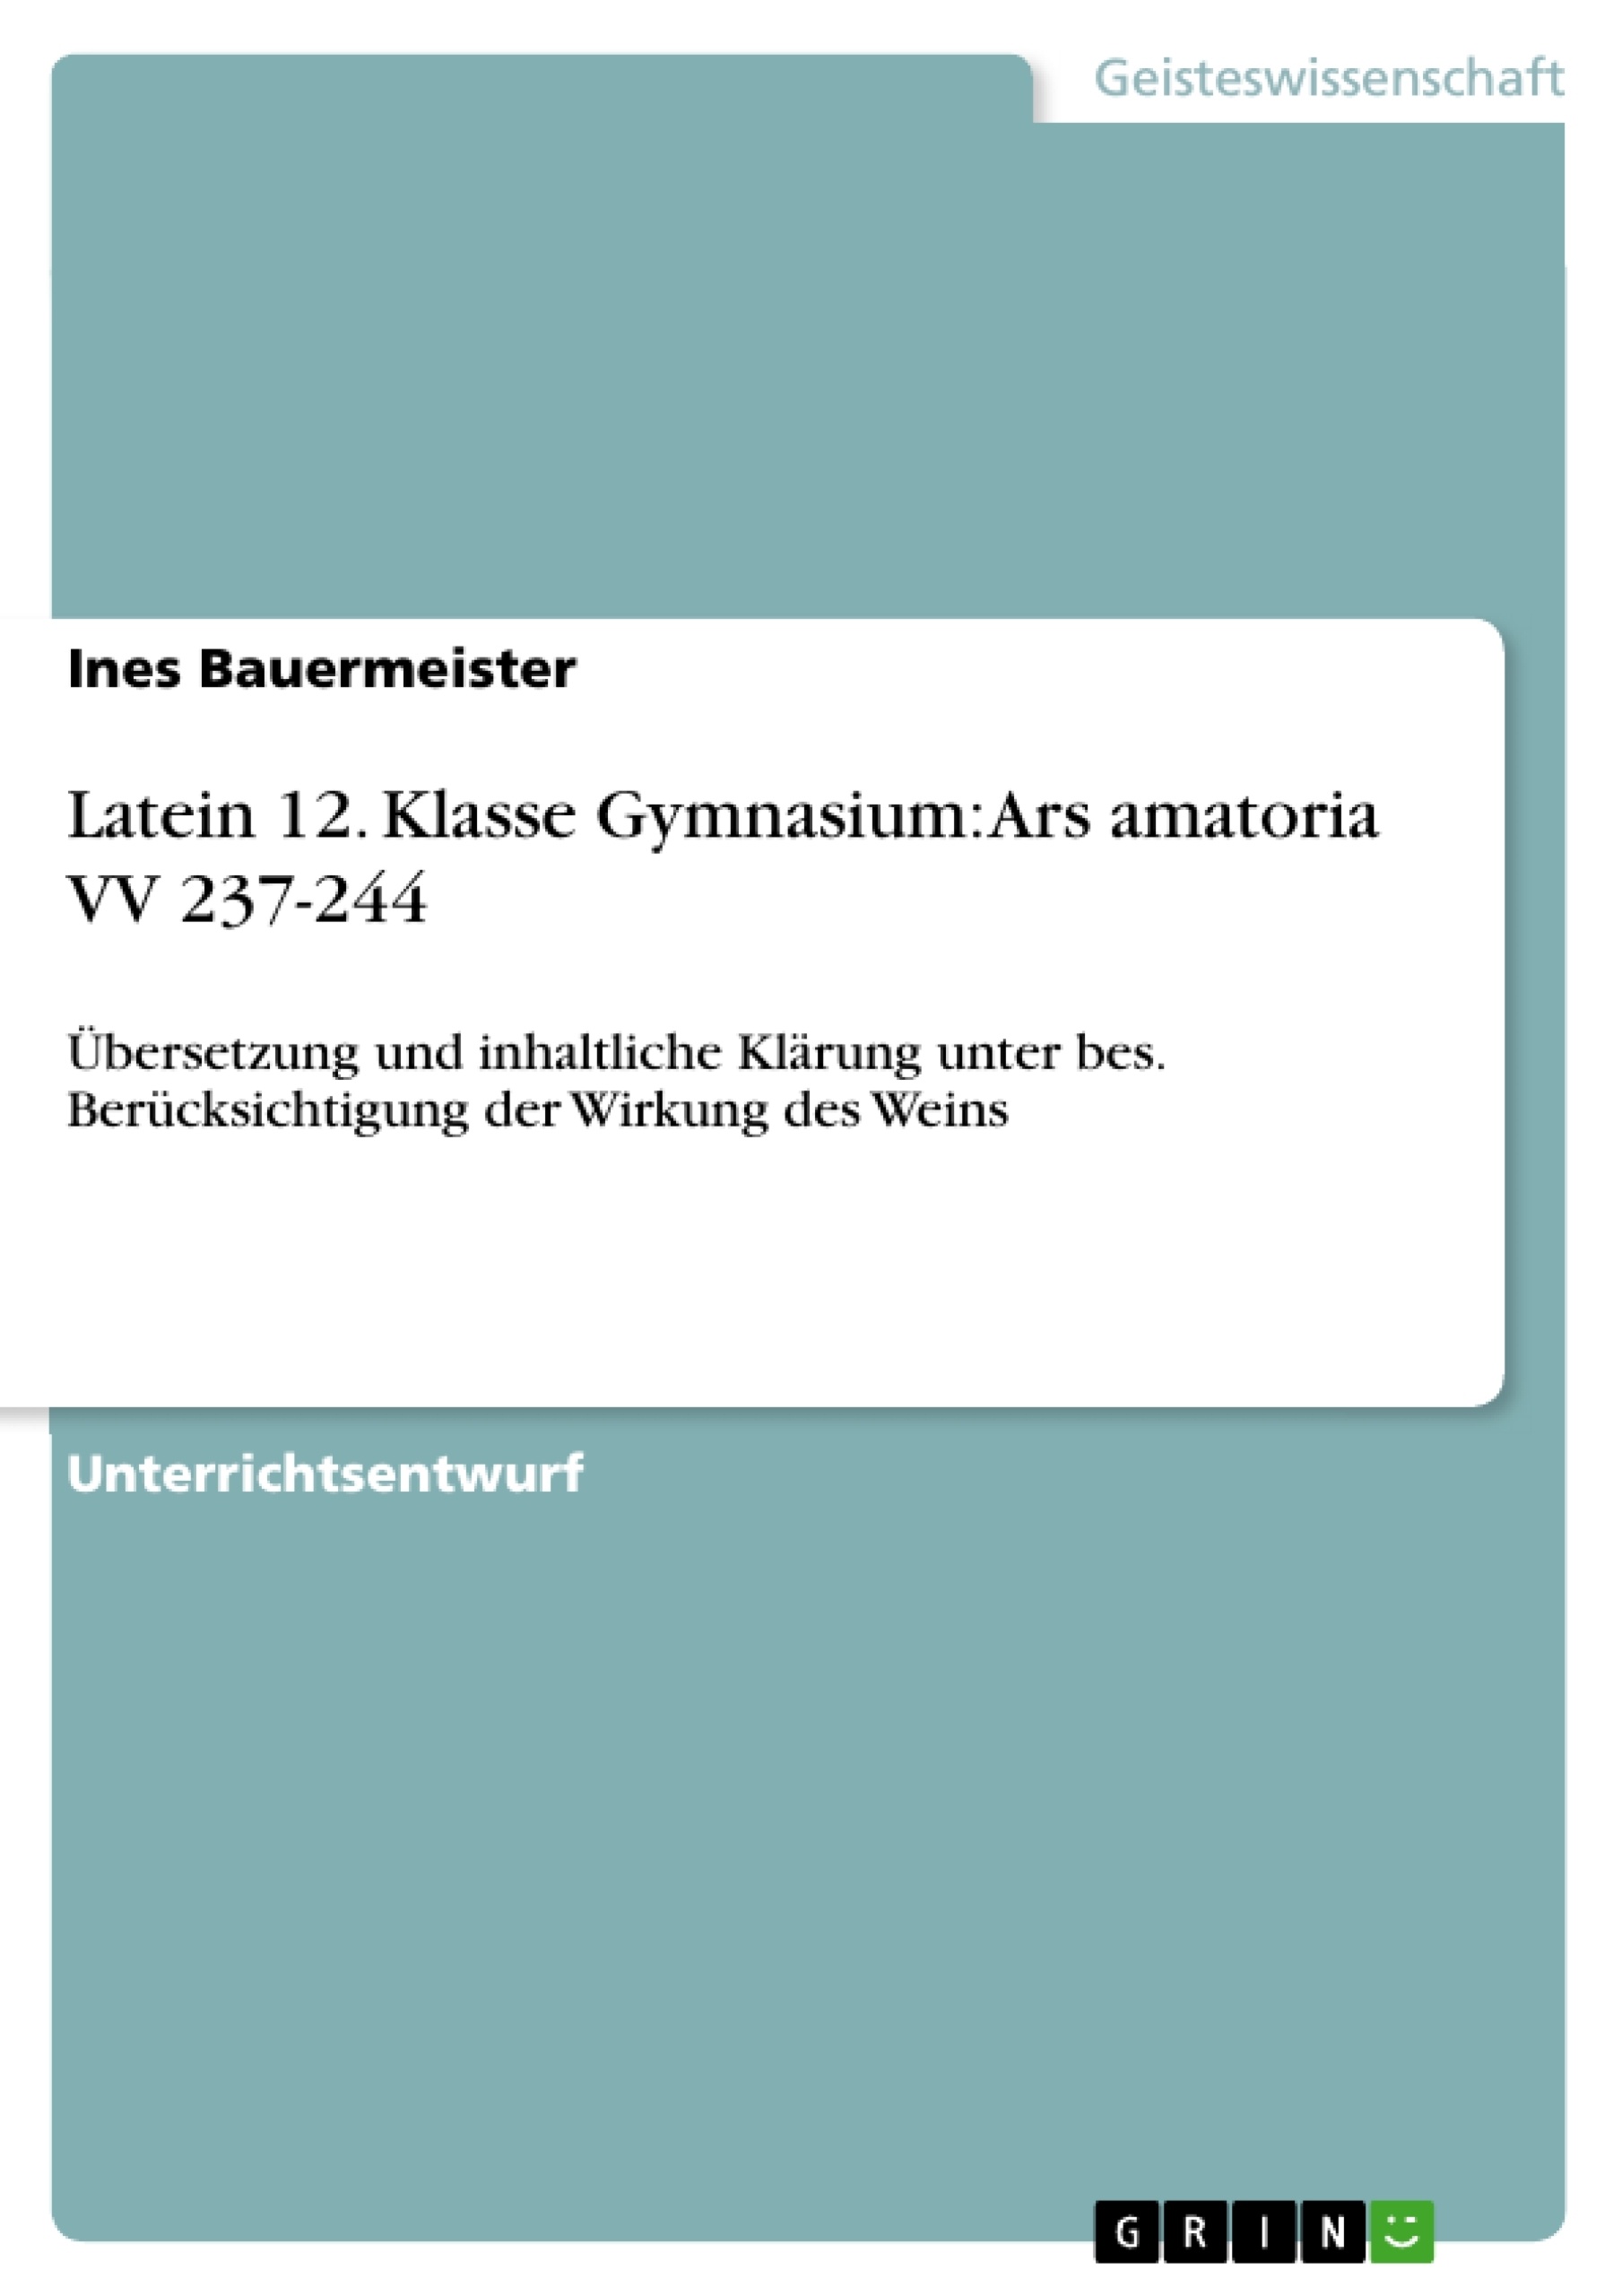 Titre: Latein 12. Klasse Gymnasium: Ars amatoria VV 237-244